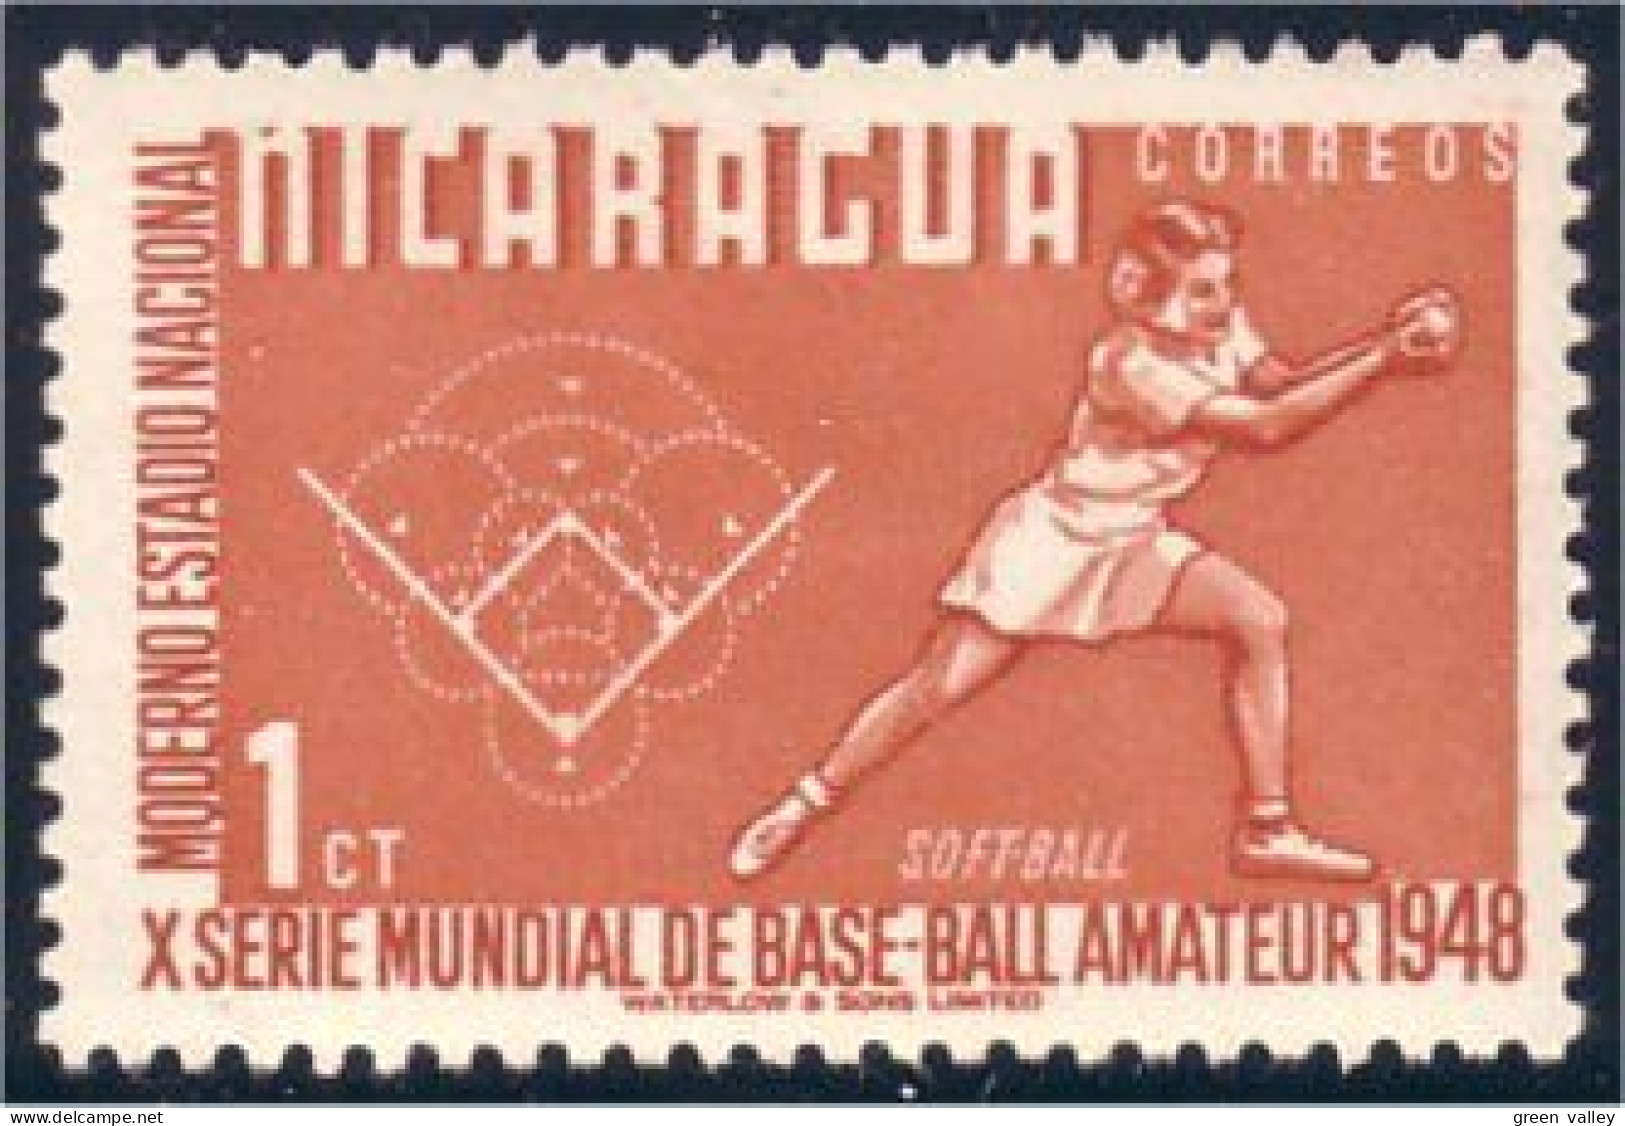 684 Nicaragua Baseball Base Ball MLH * Neuf (NIC-173) - Honkbal